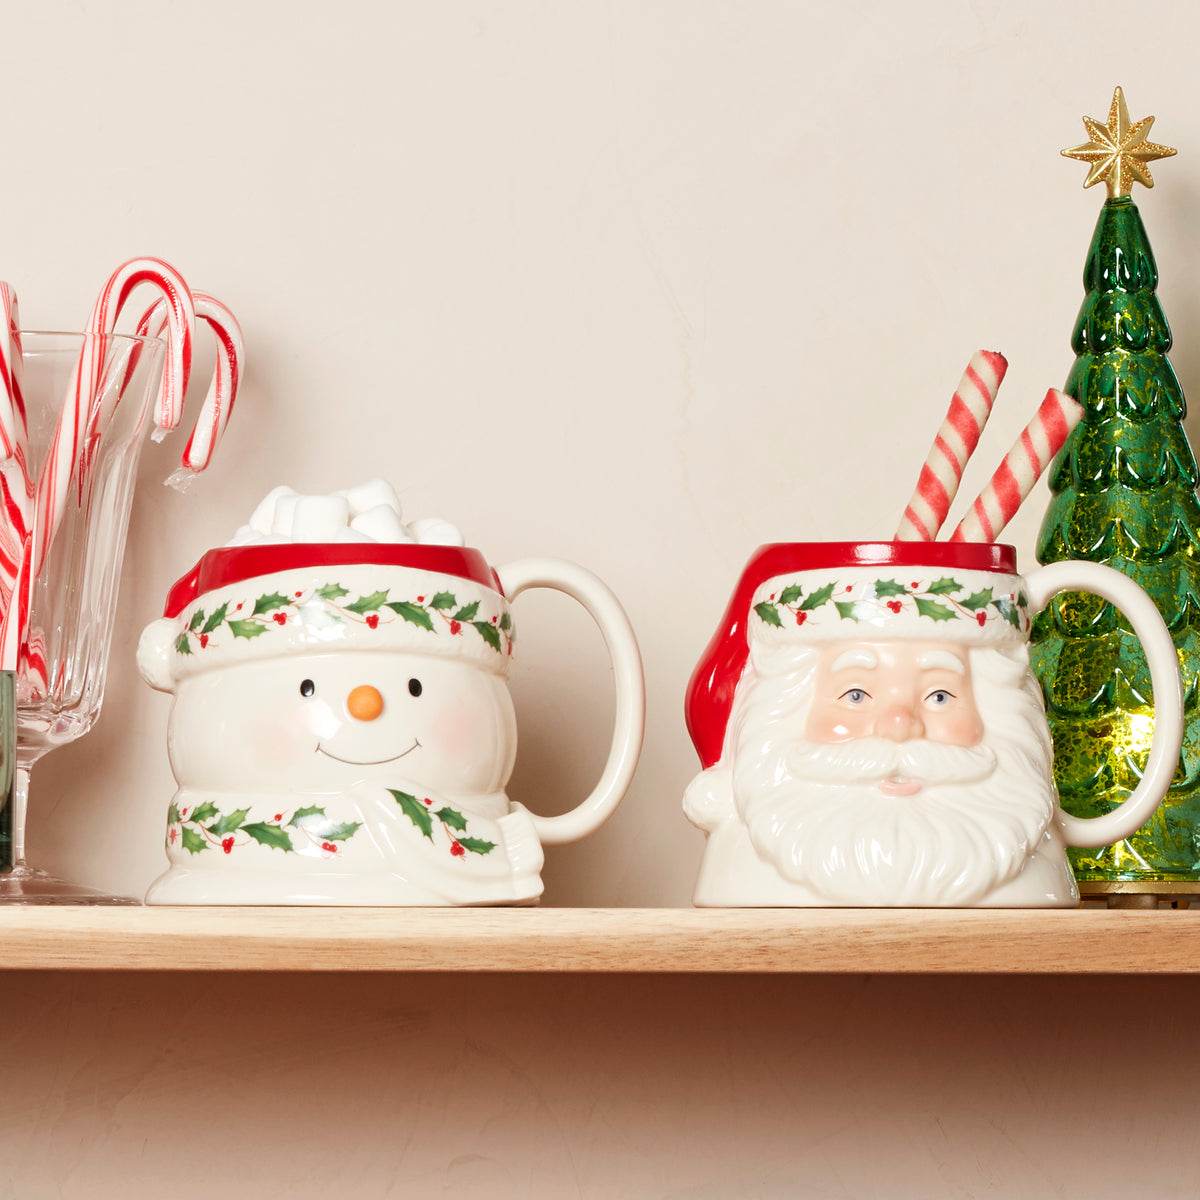 Holiday Santa Mug – Lenox Corporation